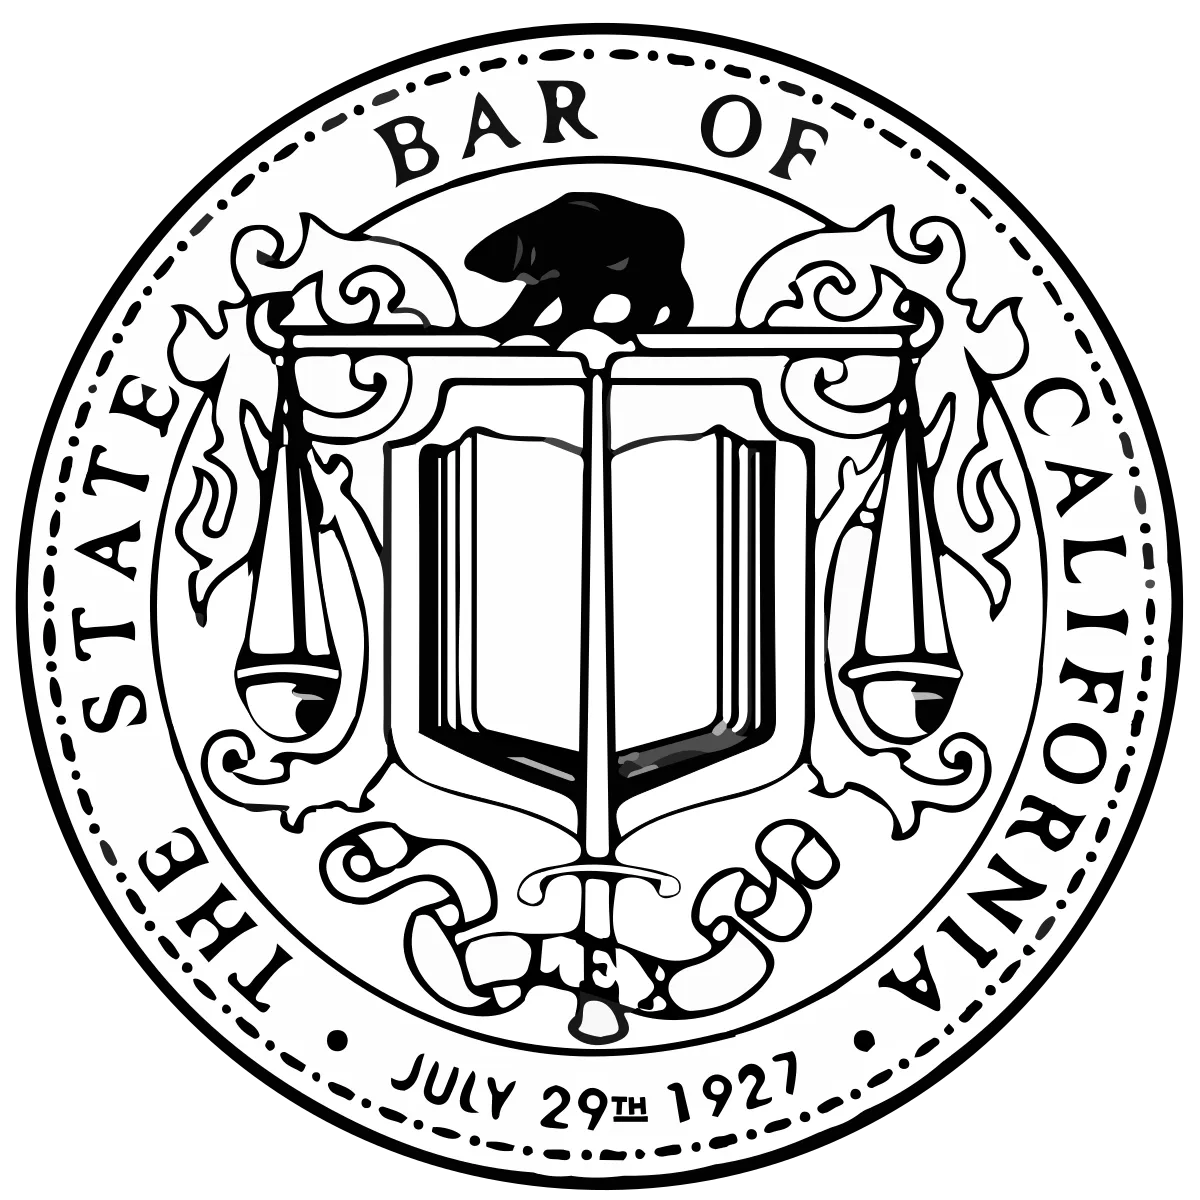 State Bar Member Association of 